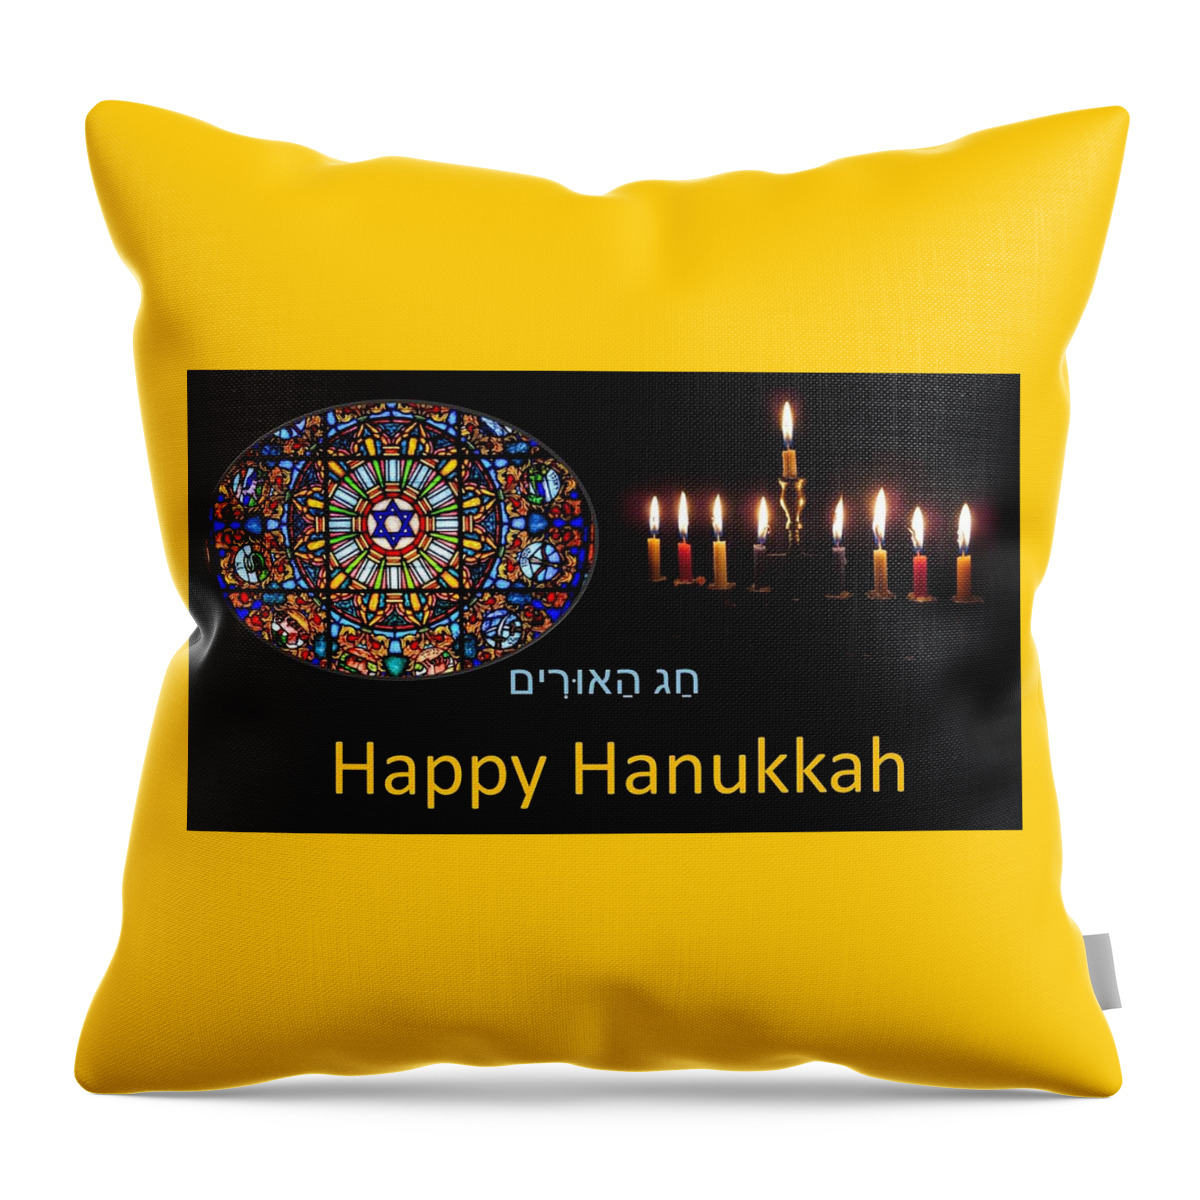 Hanukkah Throw Pillow featuring the mixed media Happy Hanukkah by Nancy Ayanna Wyatt